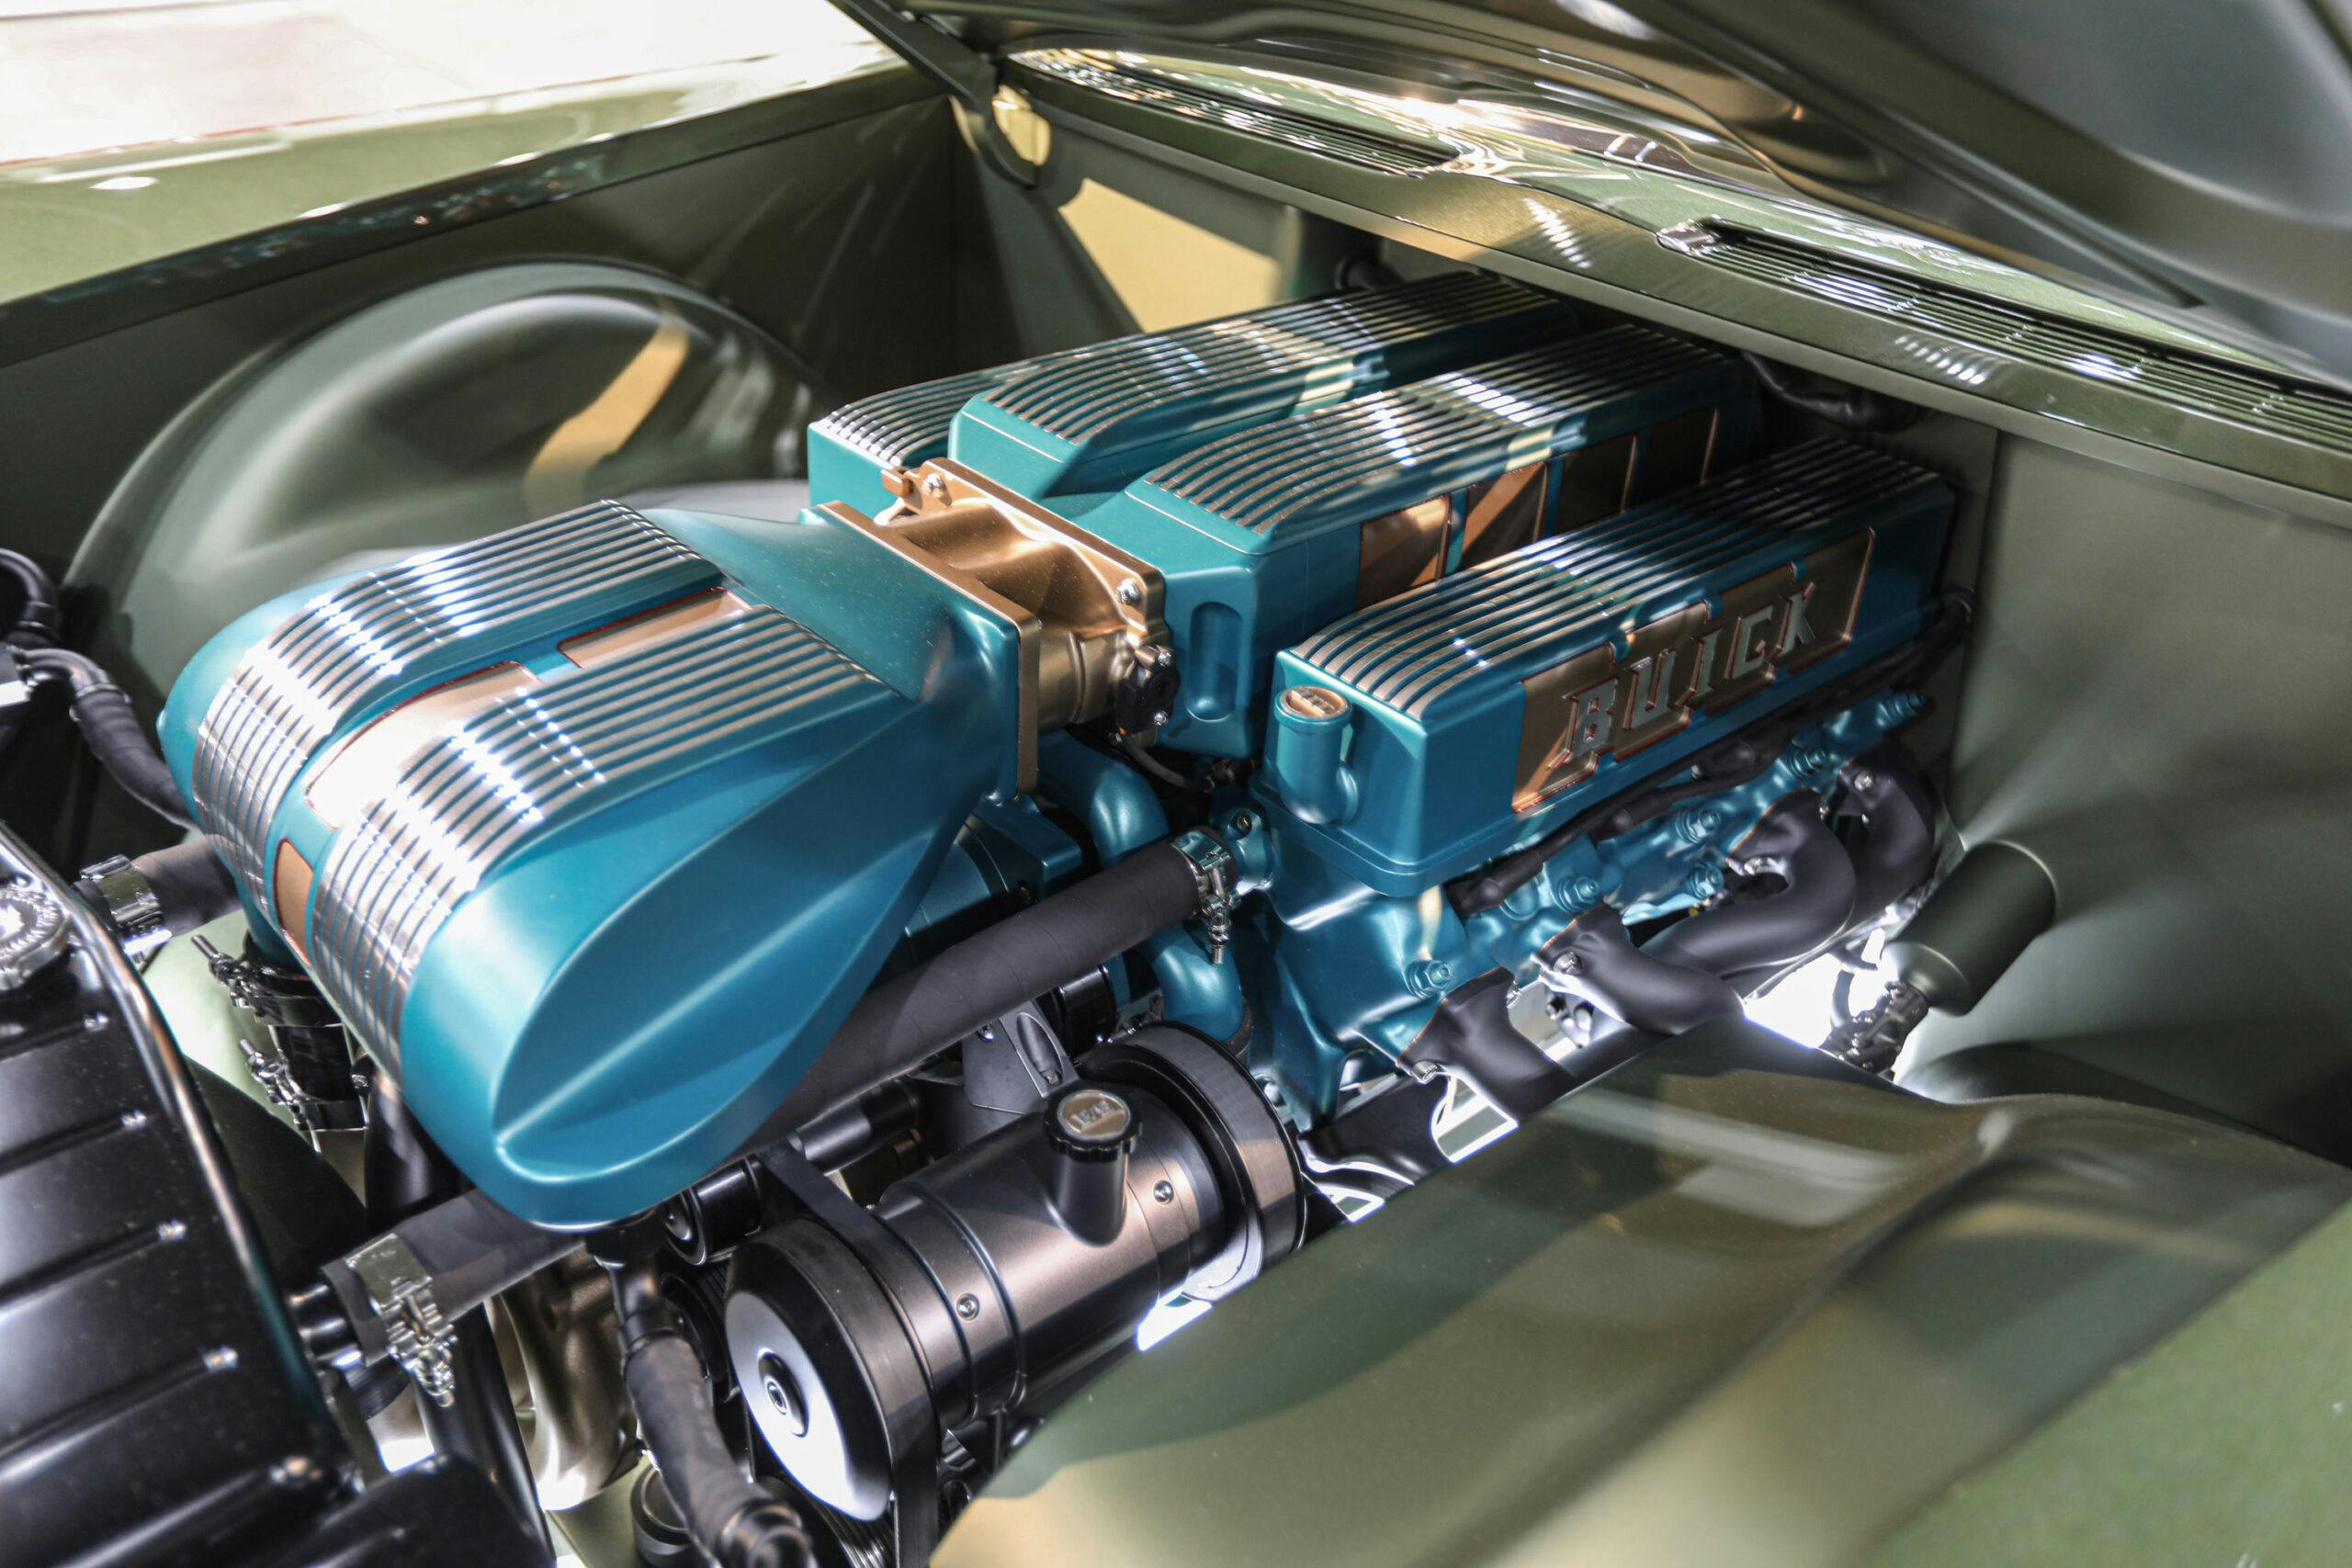 1960 Buick Invicta Al Slonaker Memorial Award engine